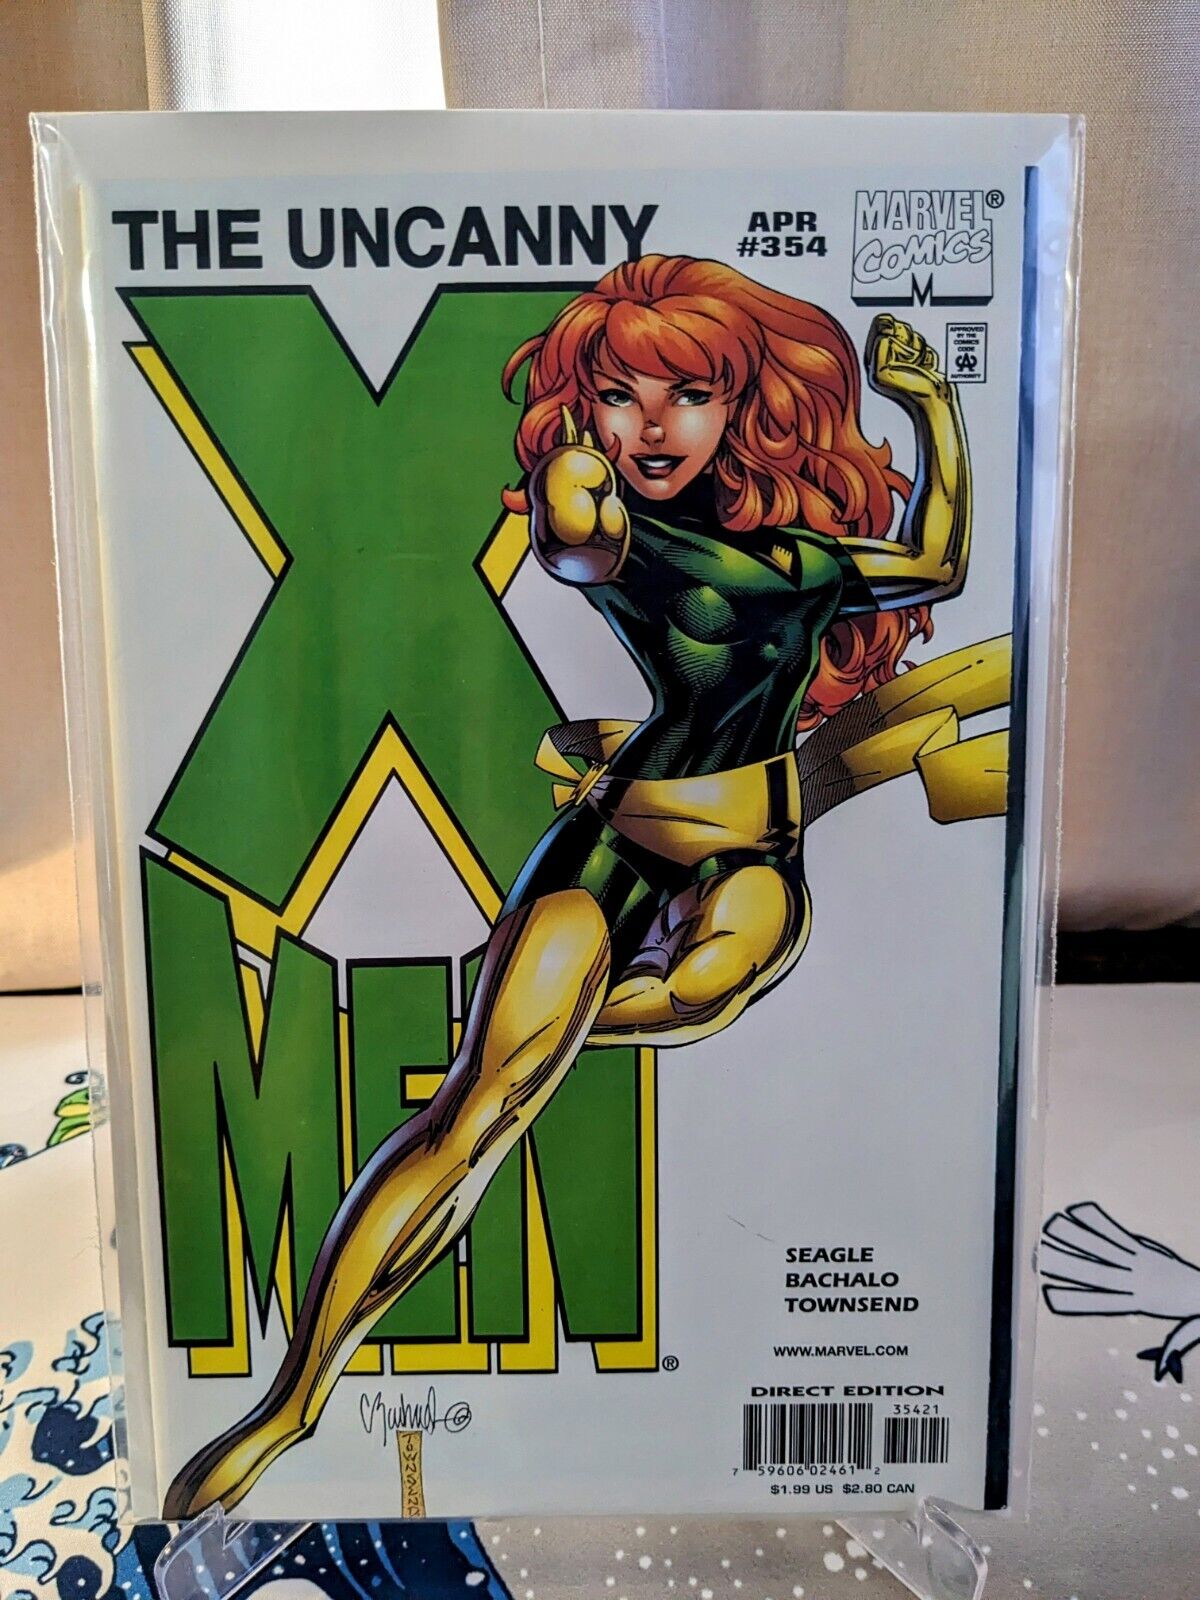 UNCANNY X-MEN # 354 MARVEL COMICS APRIL 1998 JEAN GREY FOLDOUT BACHALO VARIANT